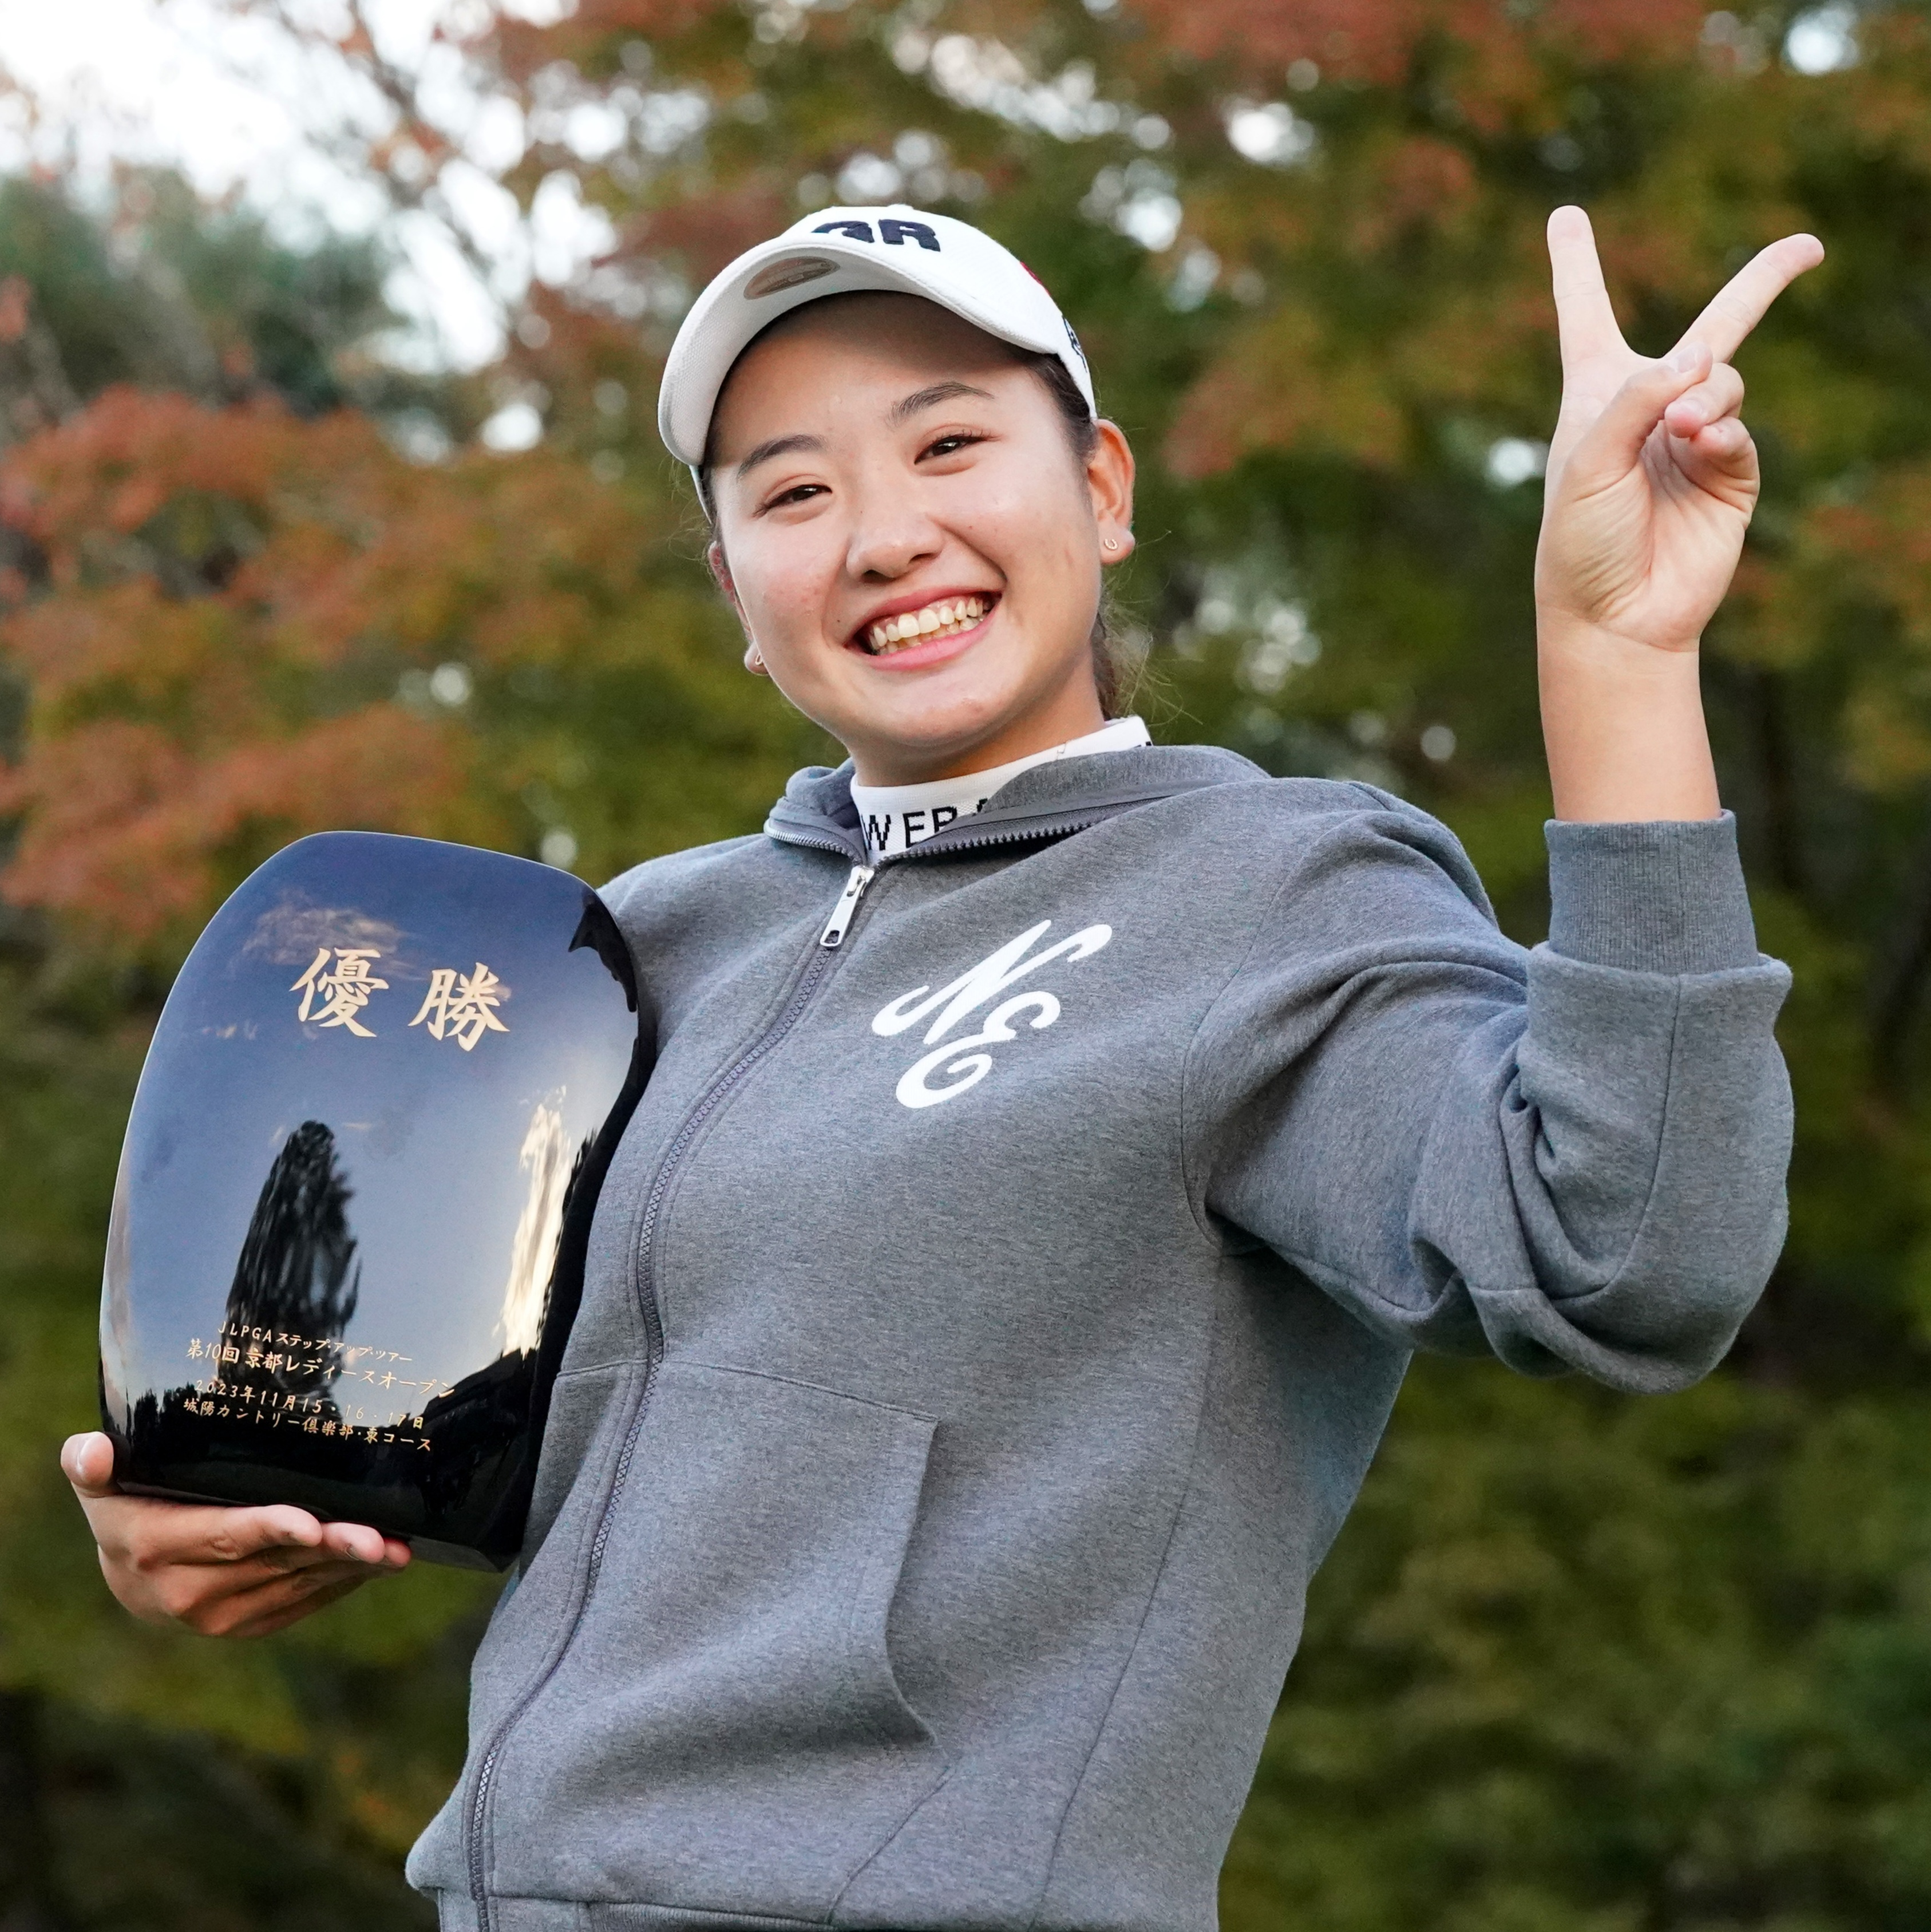 TEAM PRGR 小林夢果プロ、ステップ・アップ・ツアー初優勝おめでとう！「京都レディースオープン」で初勝利を飾りました。